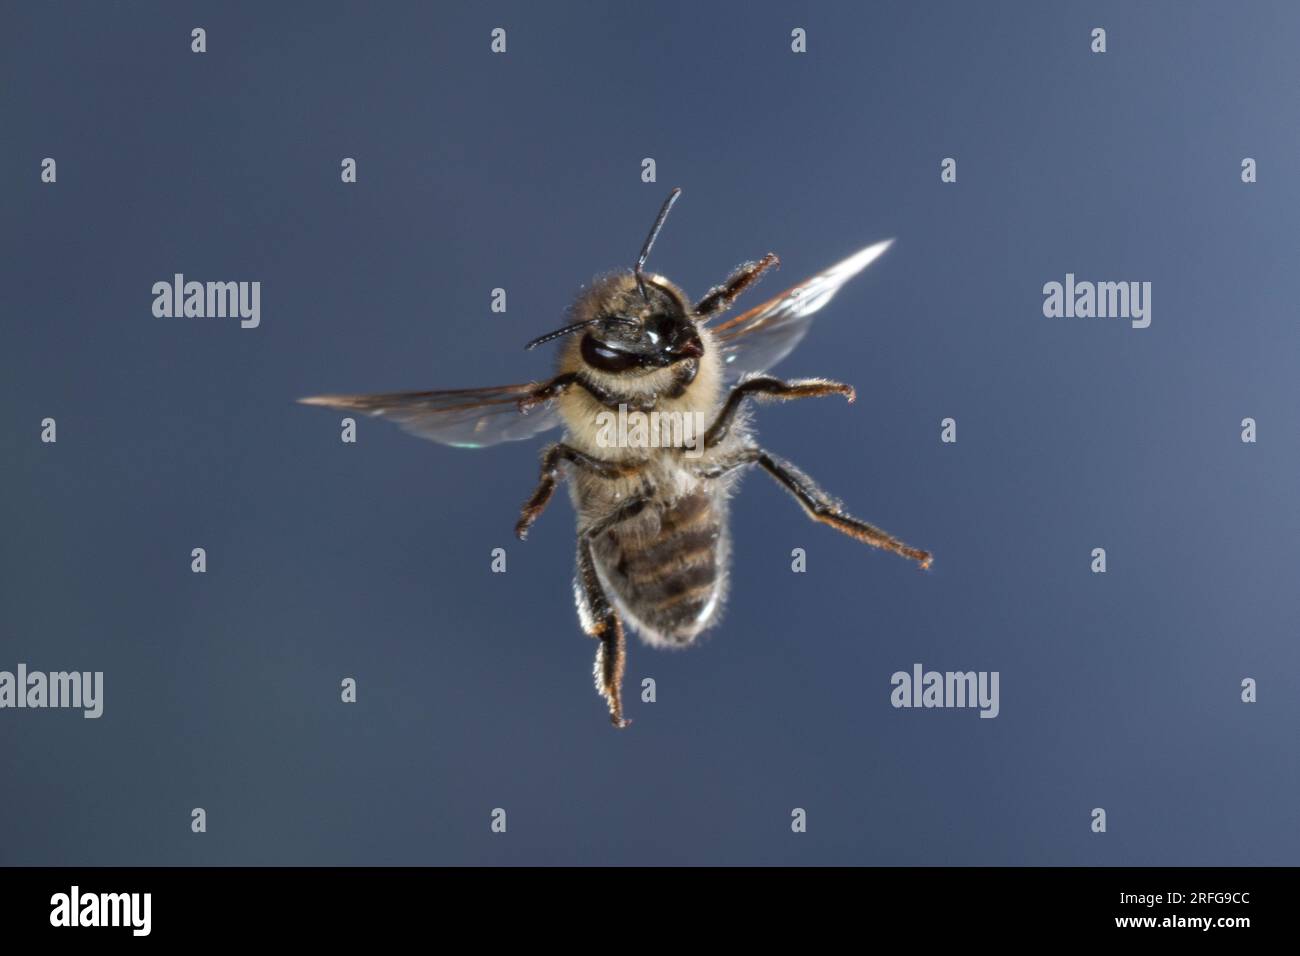 Honigbiene, Honig-Biene, Europäische Honigbiene, Westliche Honigbiene, Flug, fliegend, Biene, Bienen, Apis mellifera, Apis mellifica, honey bee, hive Stock Photo